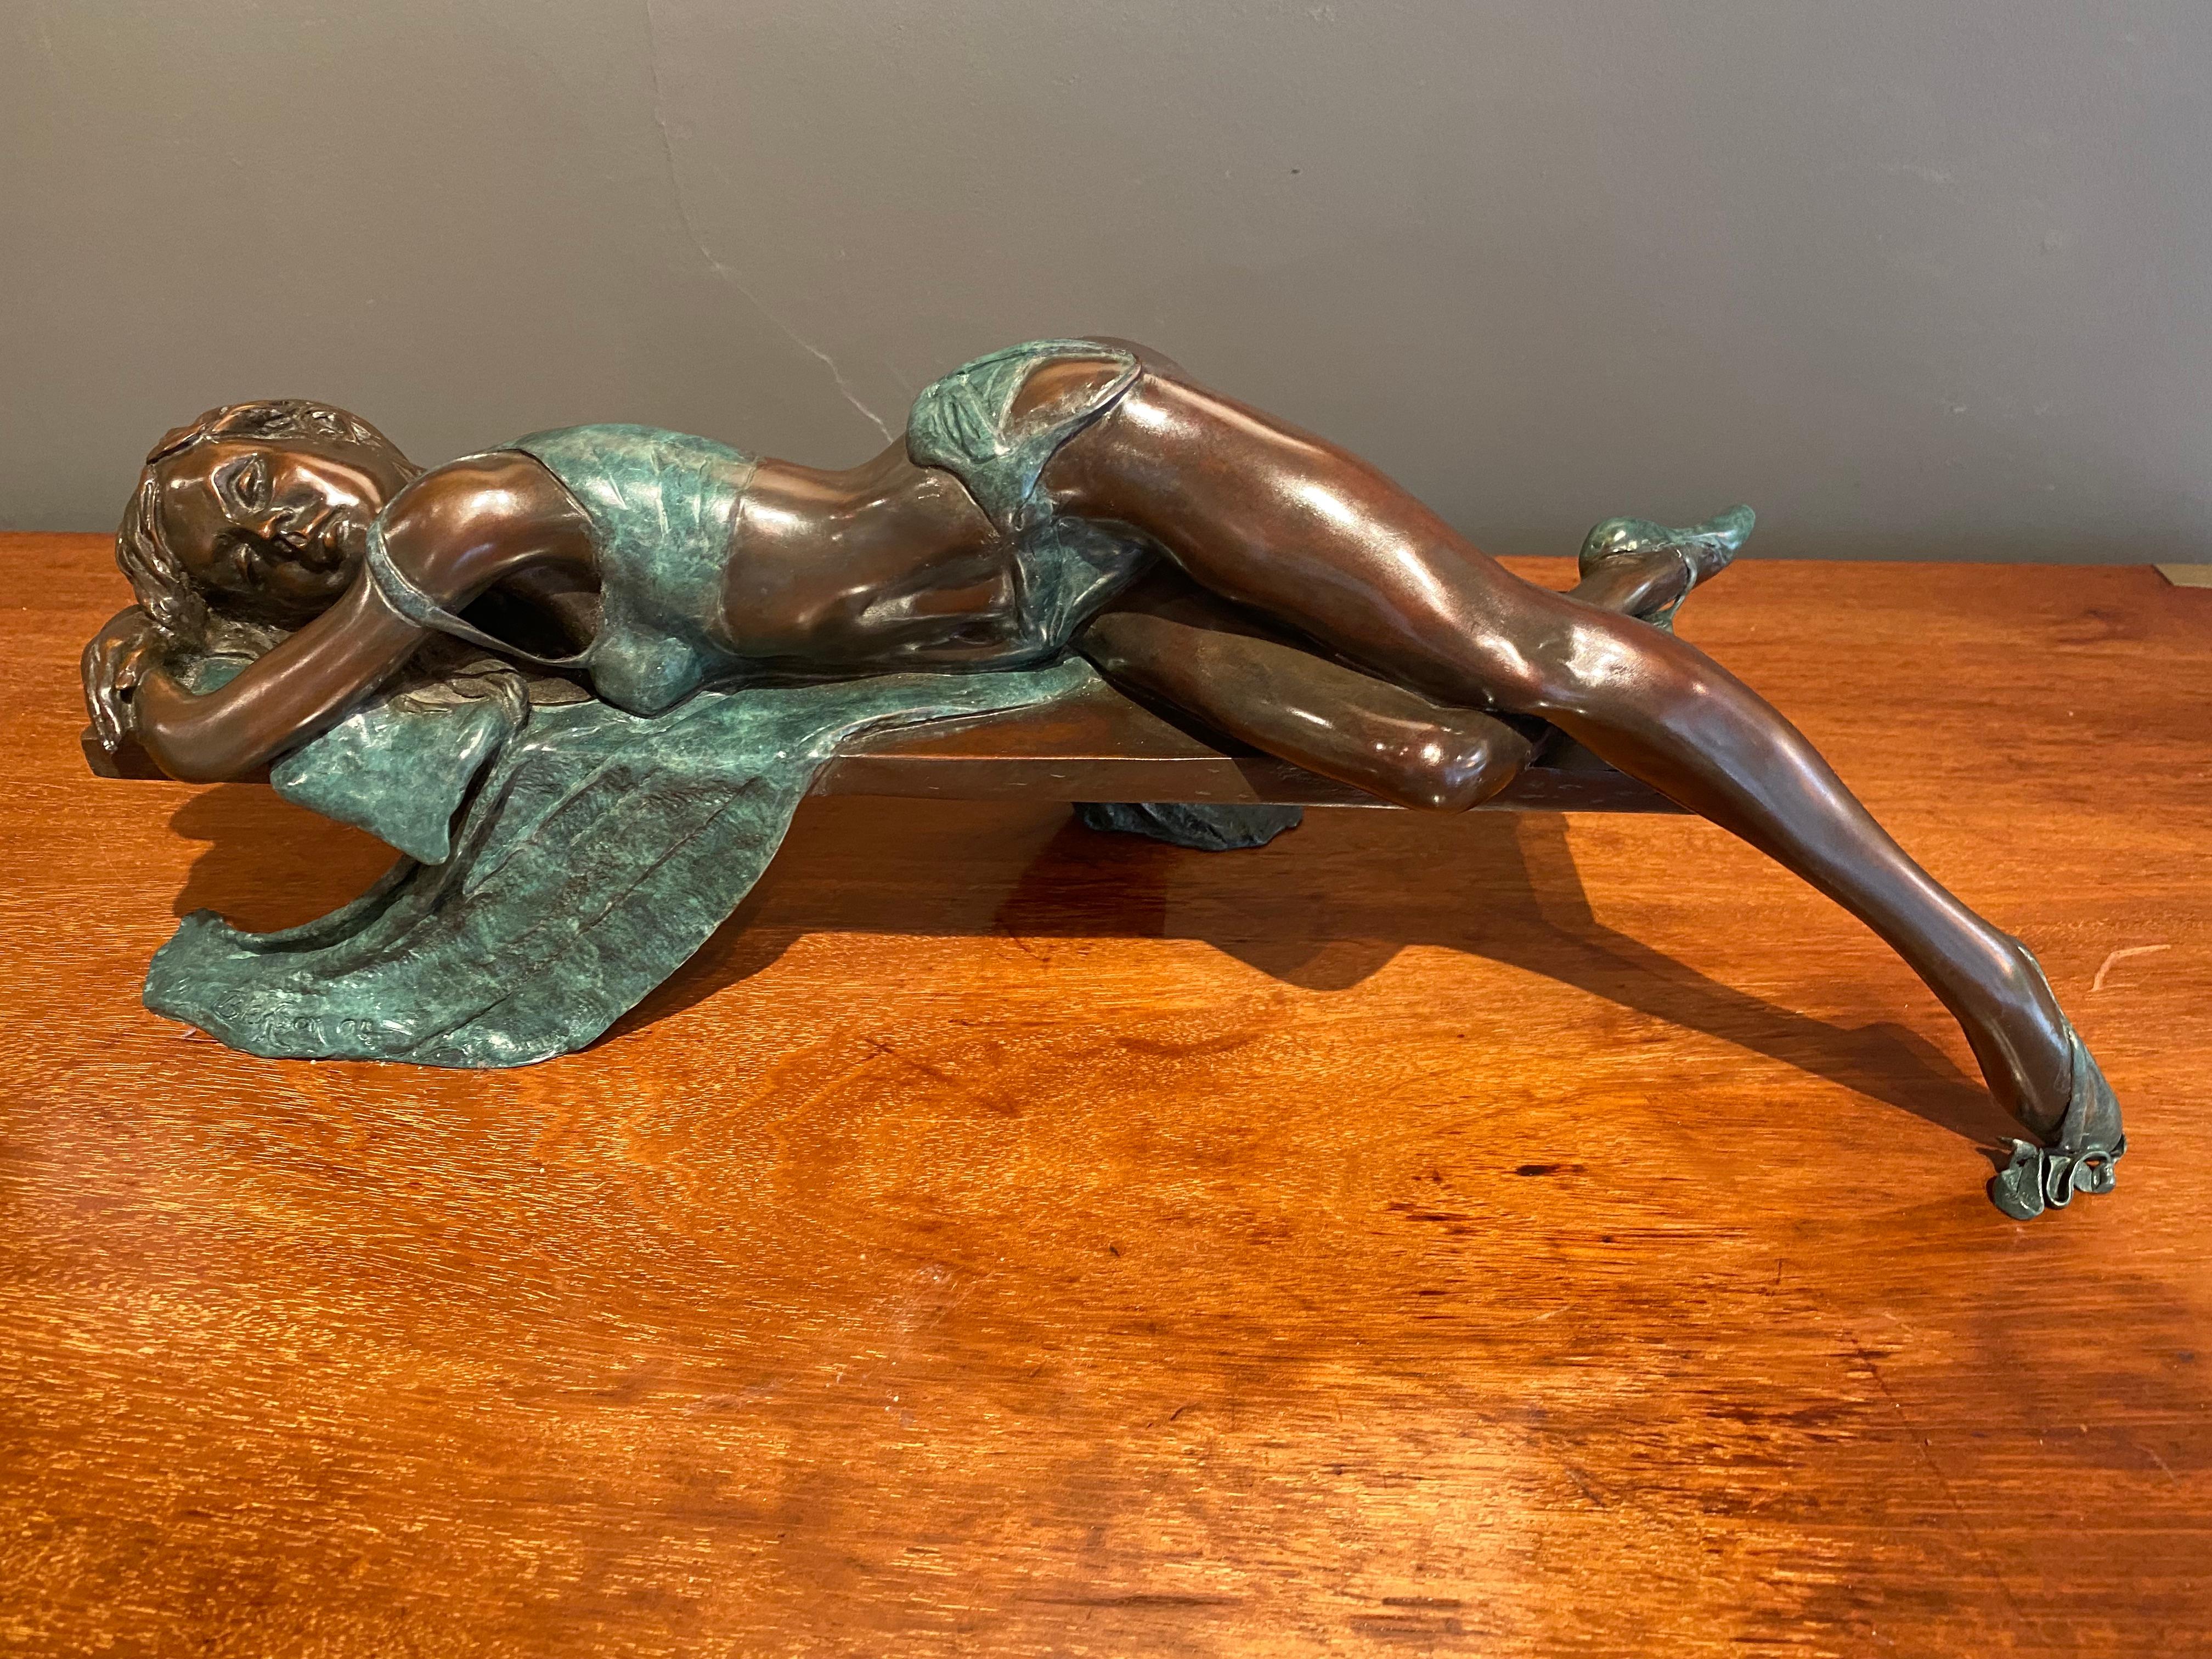 Benson Landes Figurative Sculpture - 'Relaxing Dancer' Contemporary figurative Bronze sculpture of a Ballerina 